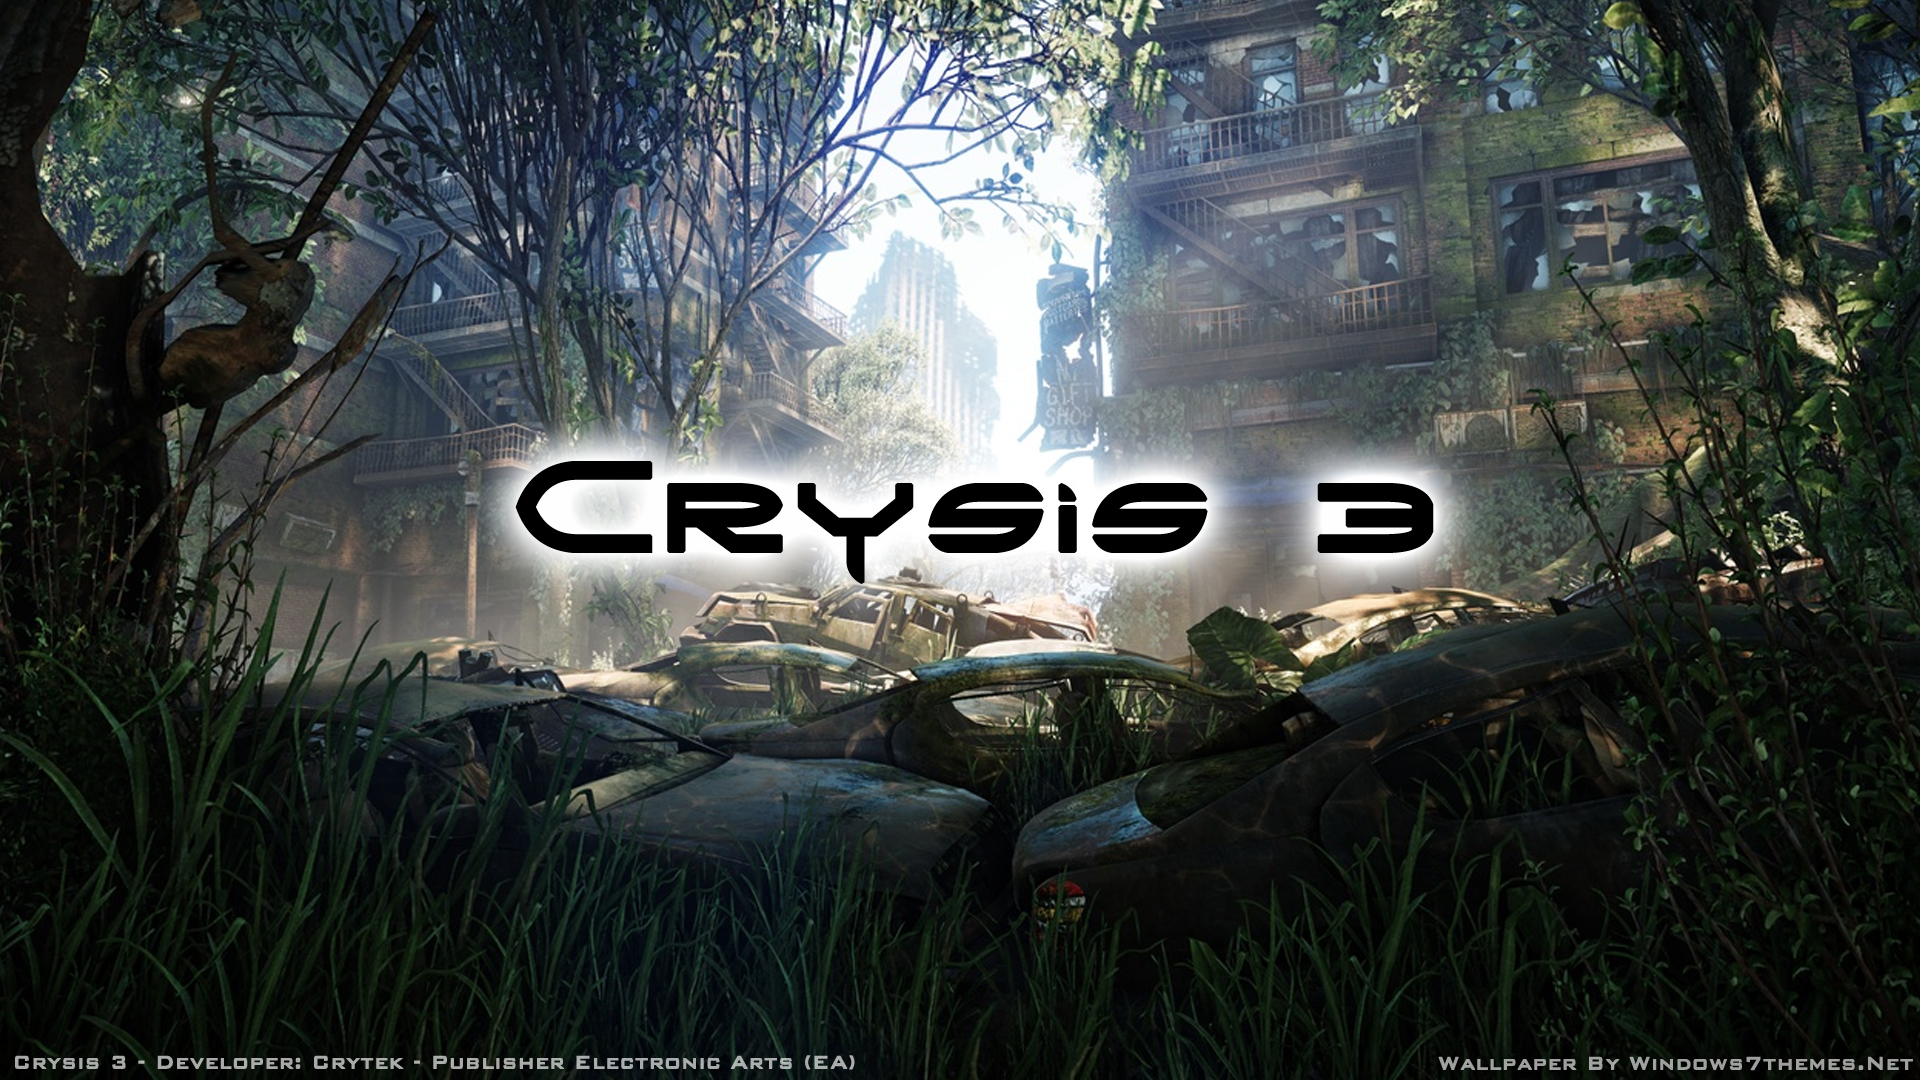 Crysis HD Wallpaper 1080p Imagebank Biz